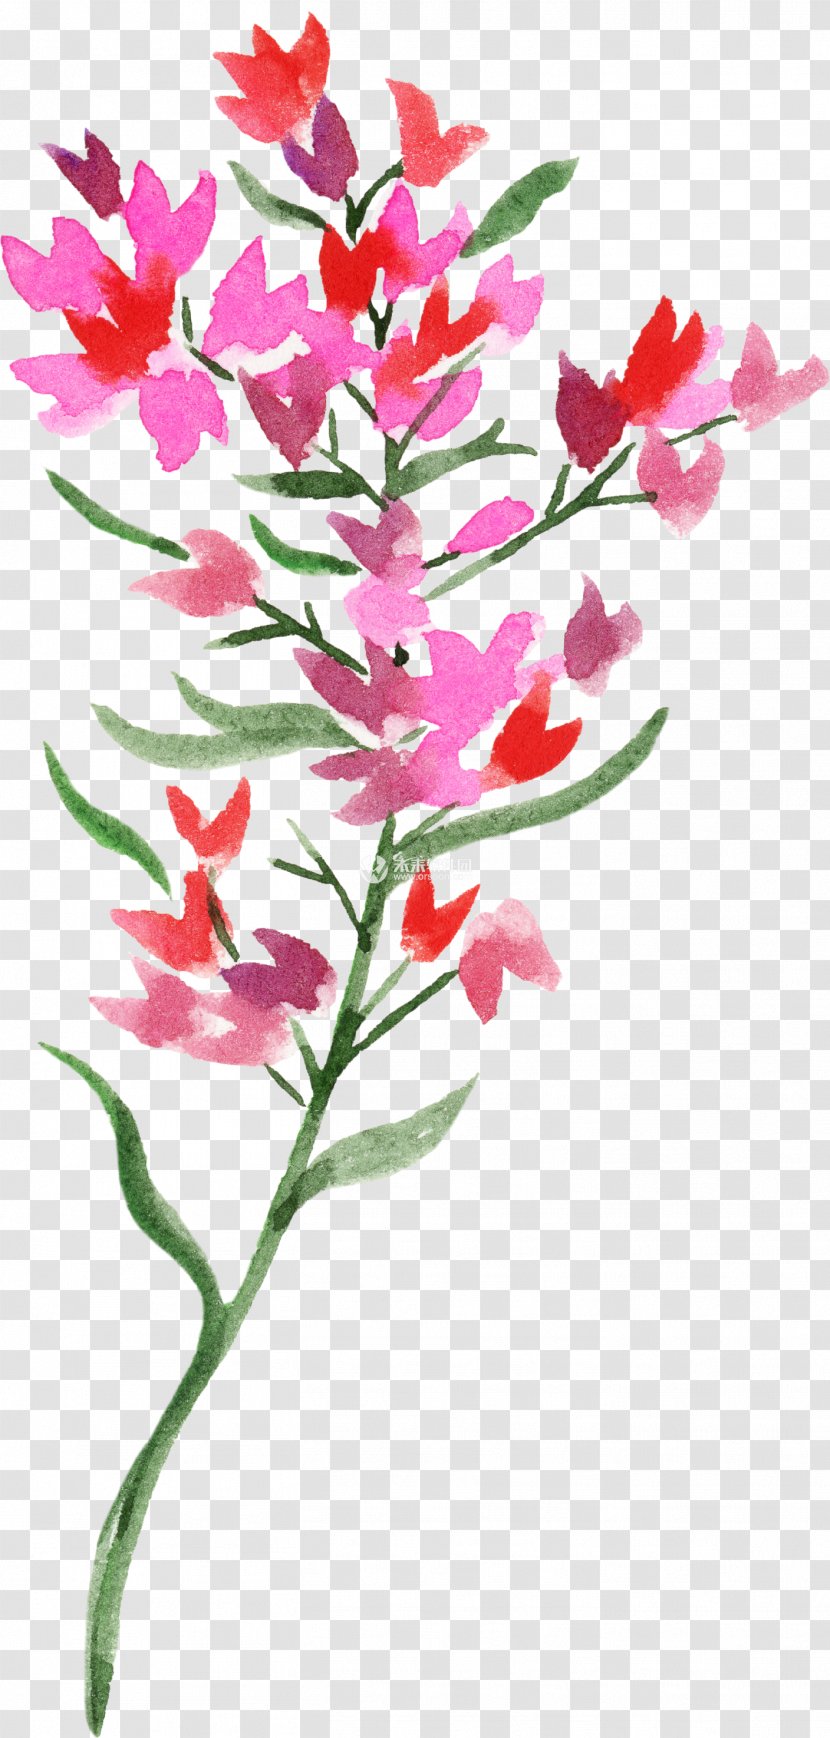 Watercolor Painting Floral Design Flower Image - Blog Transparent PNG